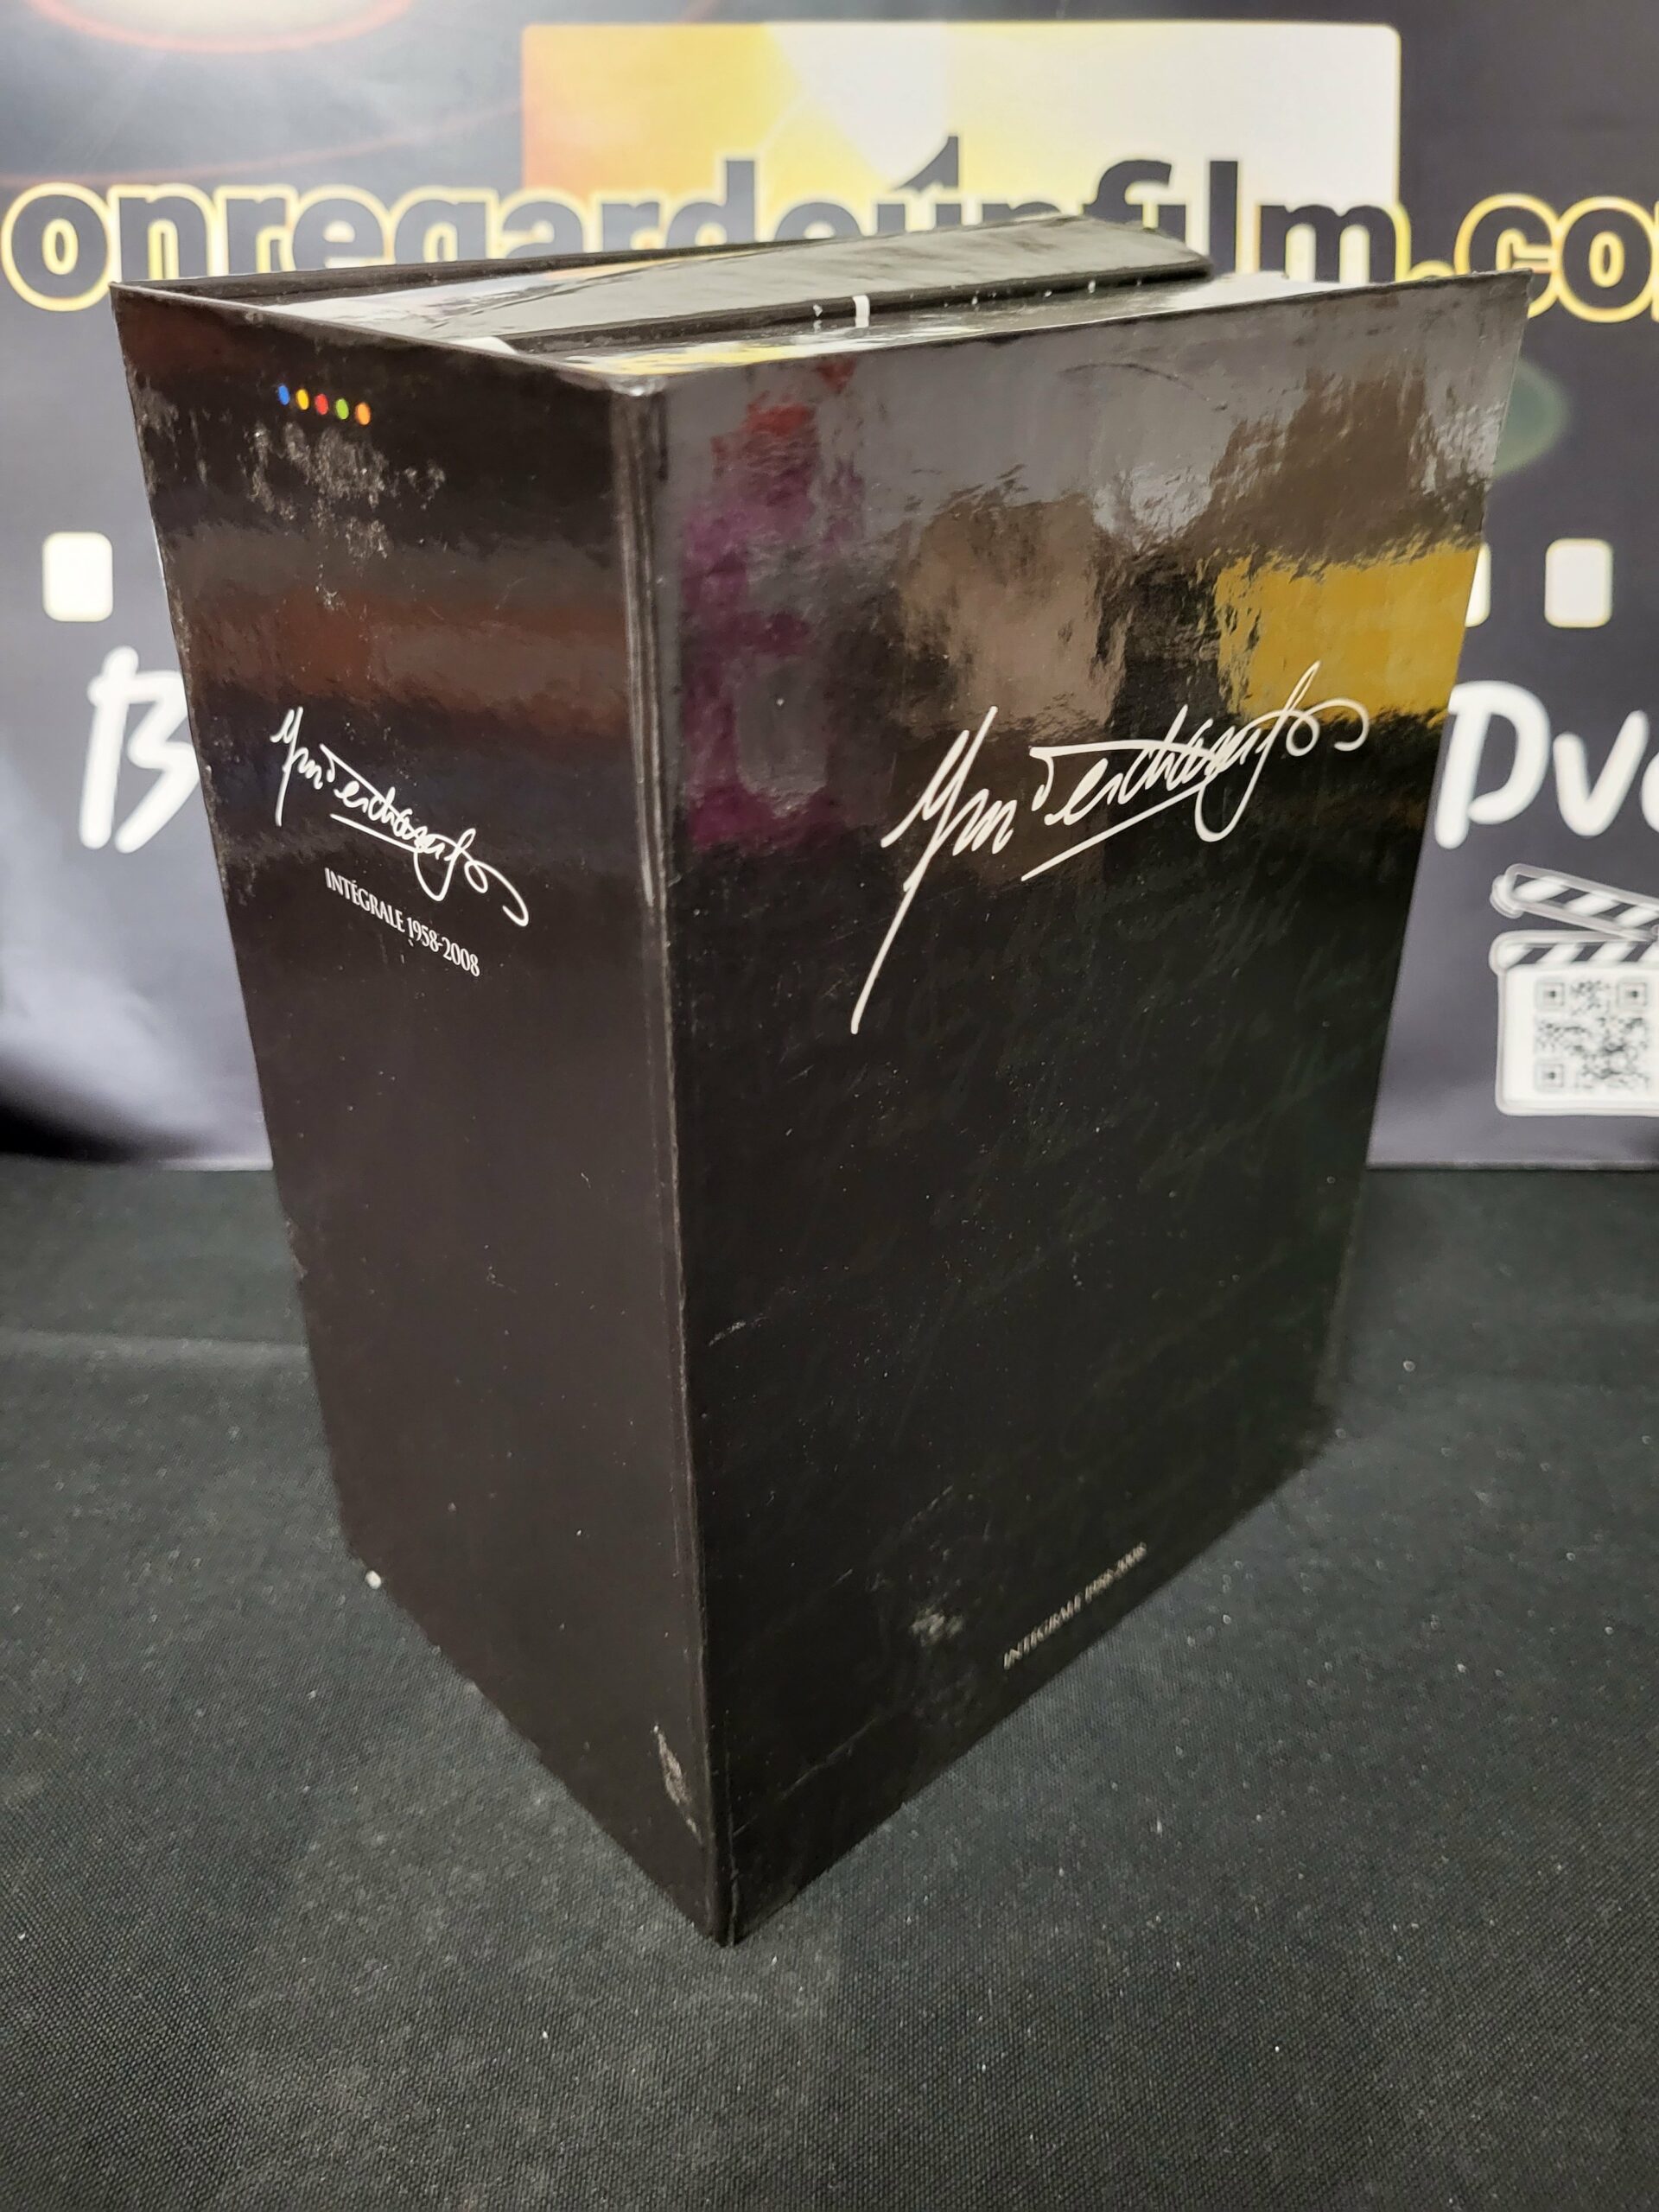 Yvon Deschamps - L'intégral 1958-2008 - Coffret DVD